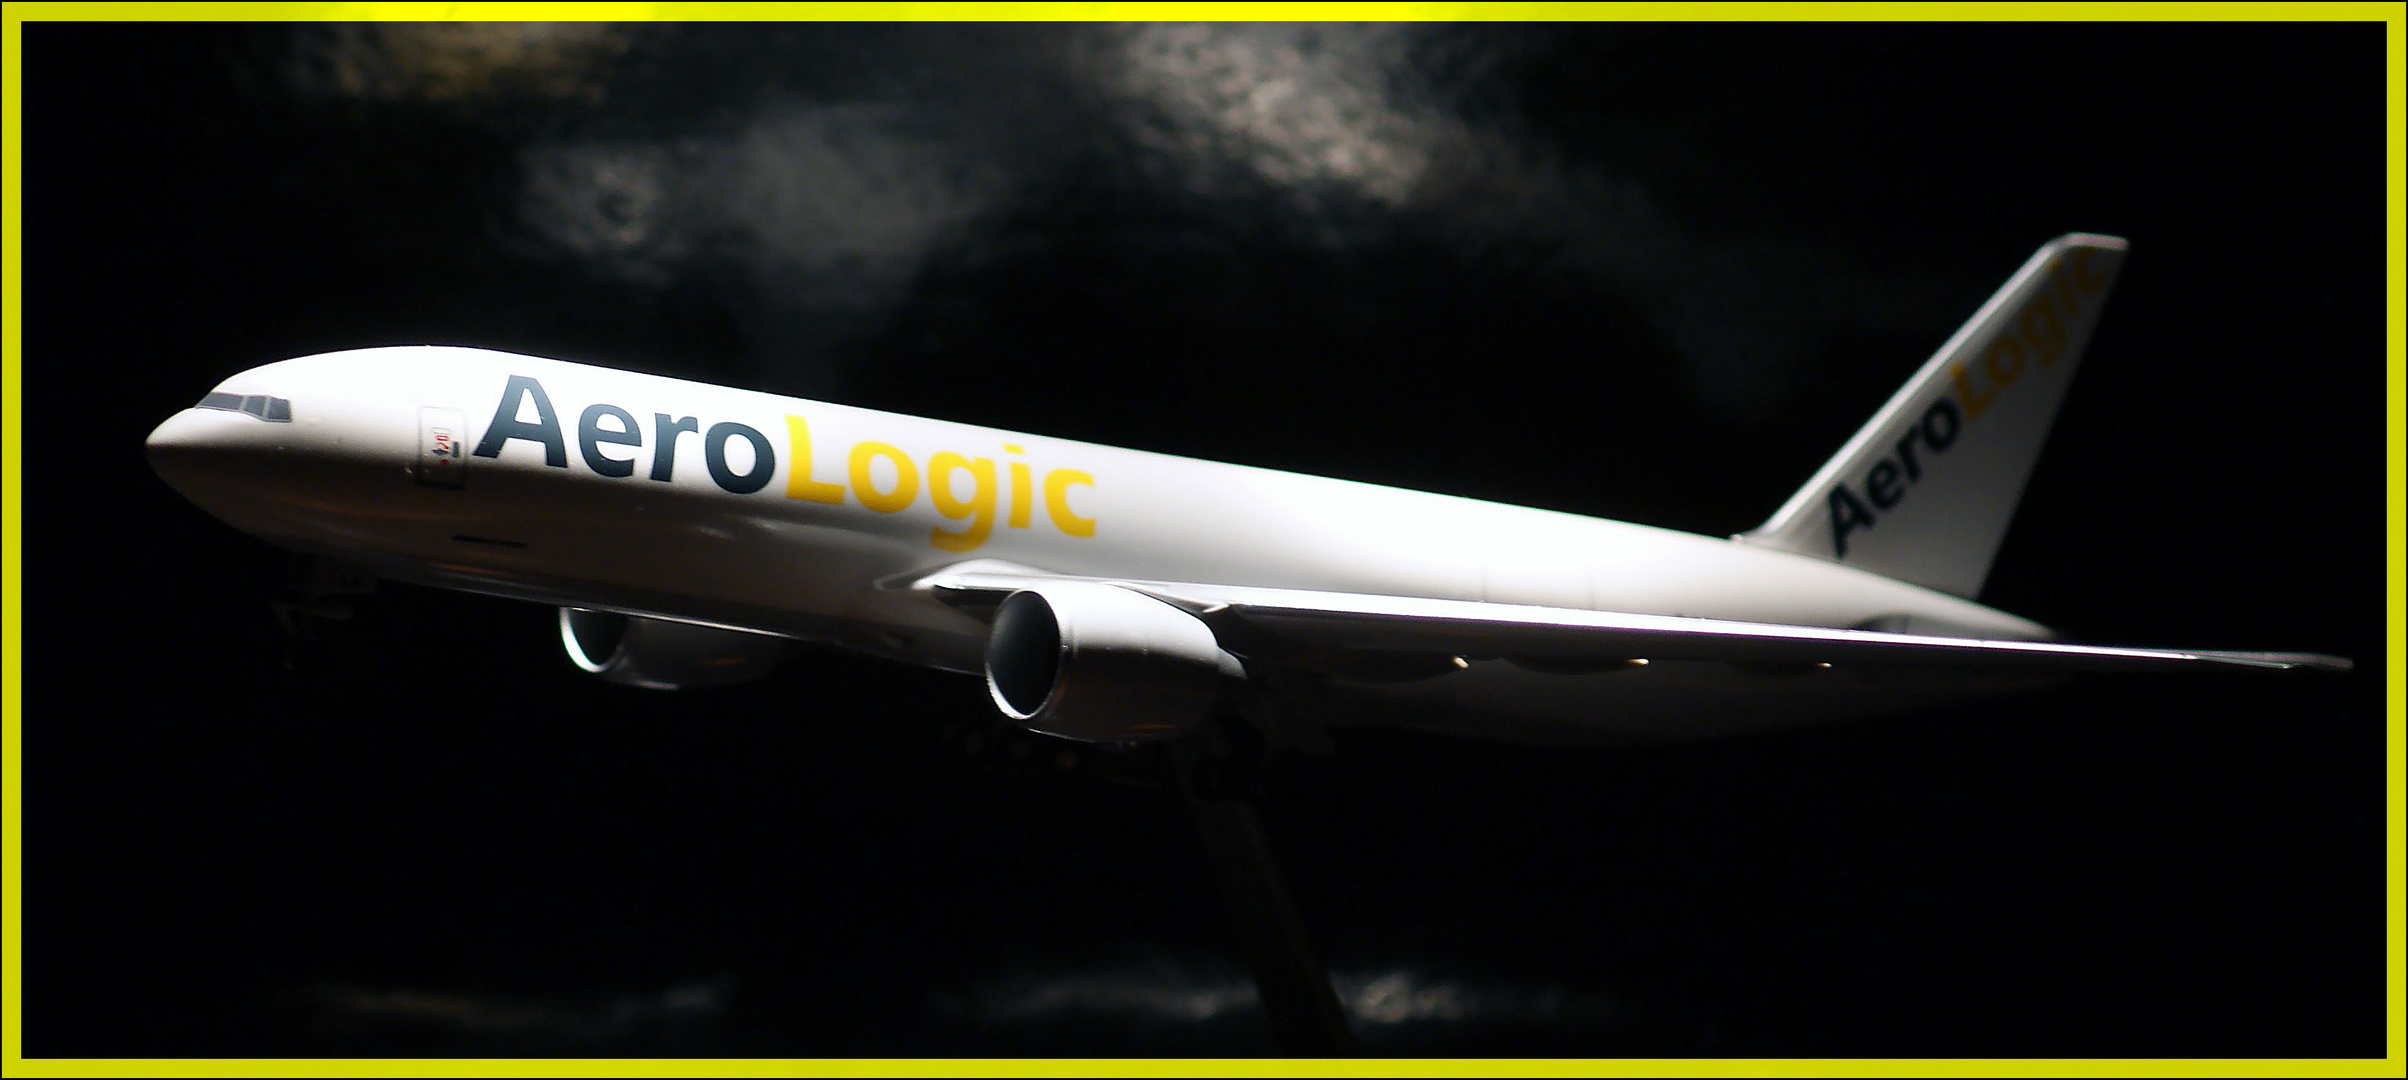 Aero Logic